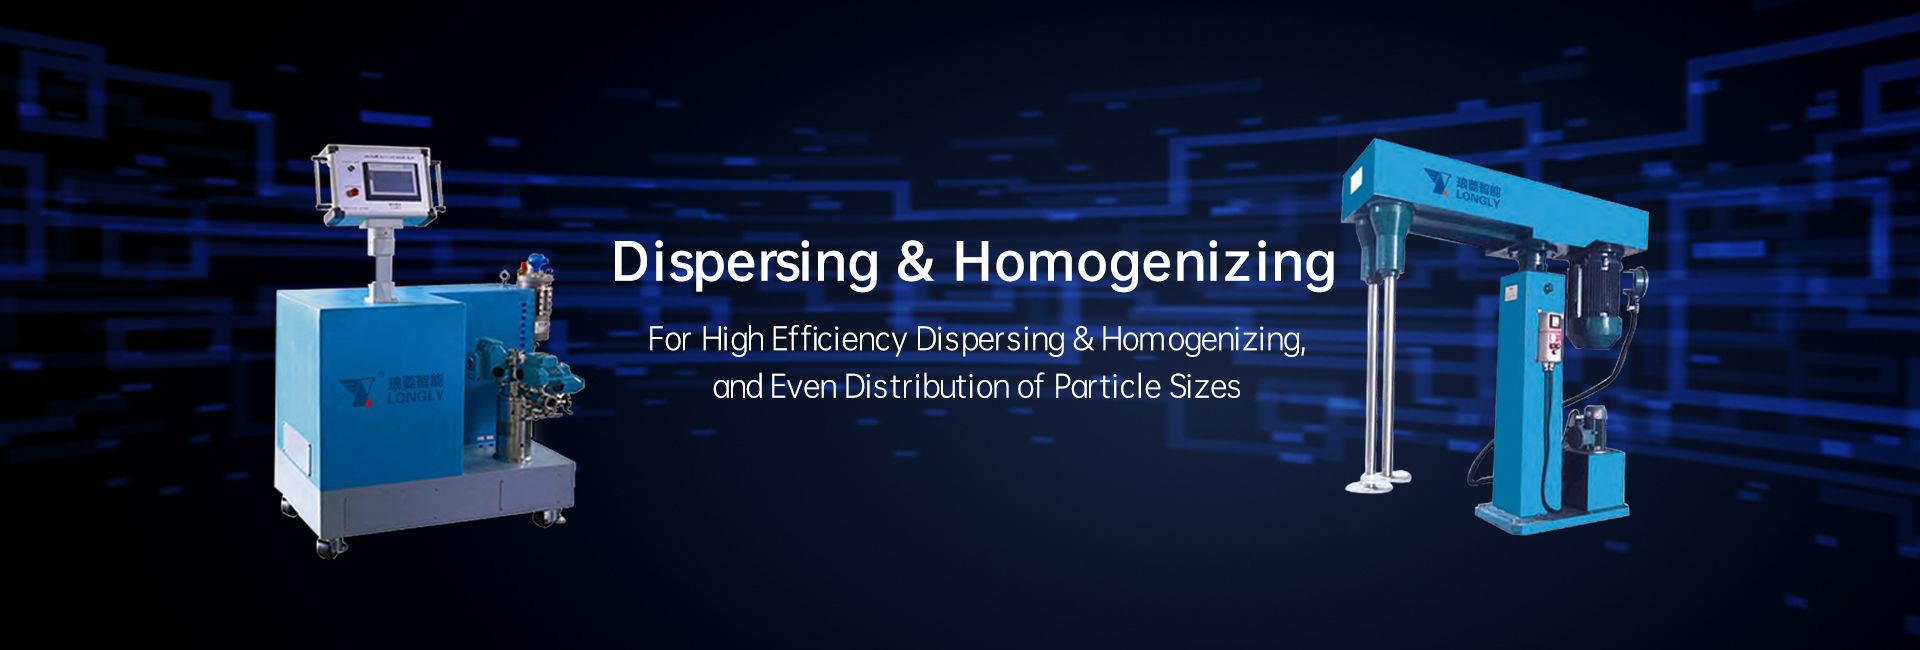 Dispersing & Homogenizing Technologies - LONGLY